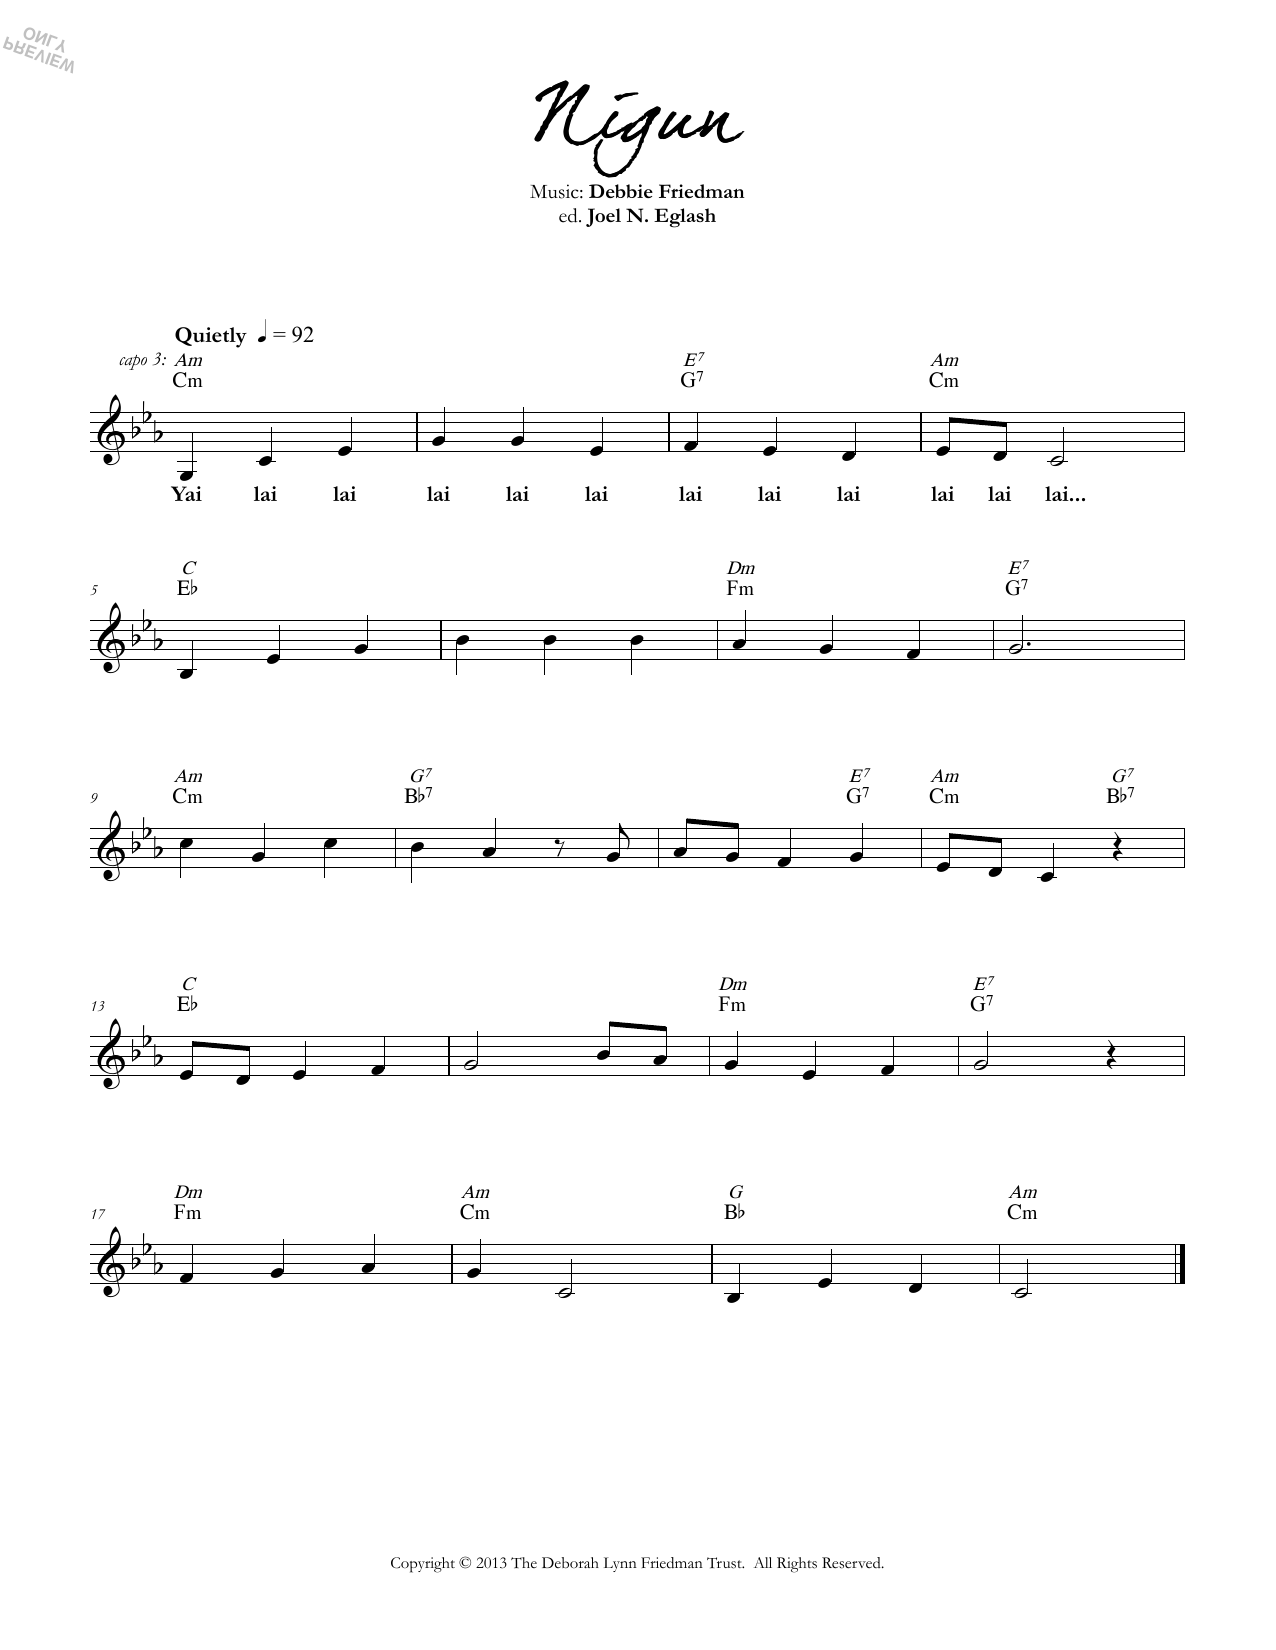 Download Debbie Friedman Nigun Sheet Music and learn how to play Lead Sheet / Fake Book PDF digital score in minutes